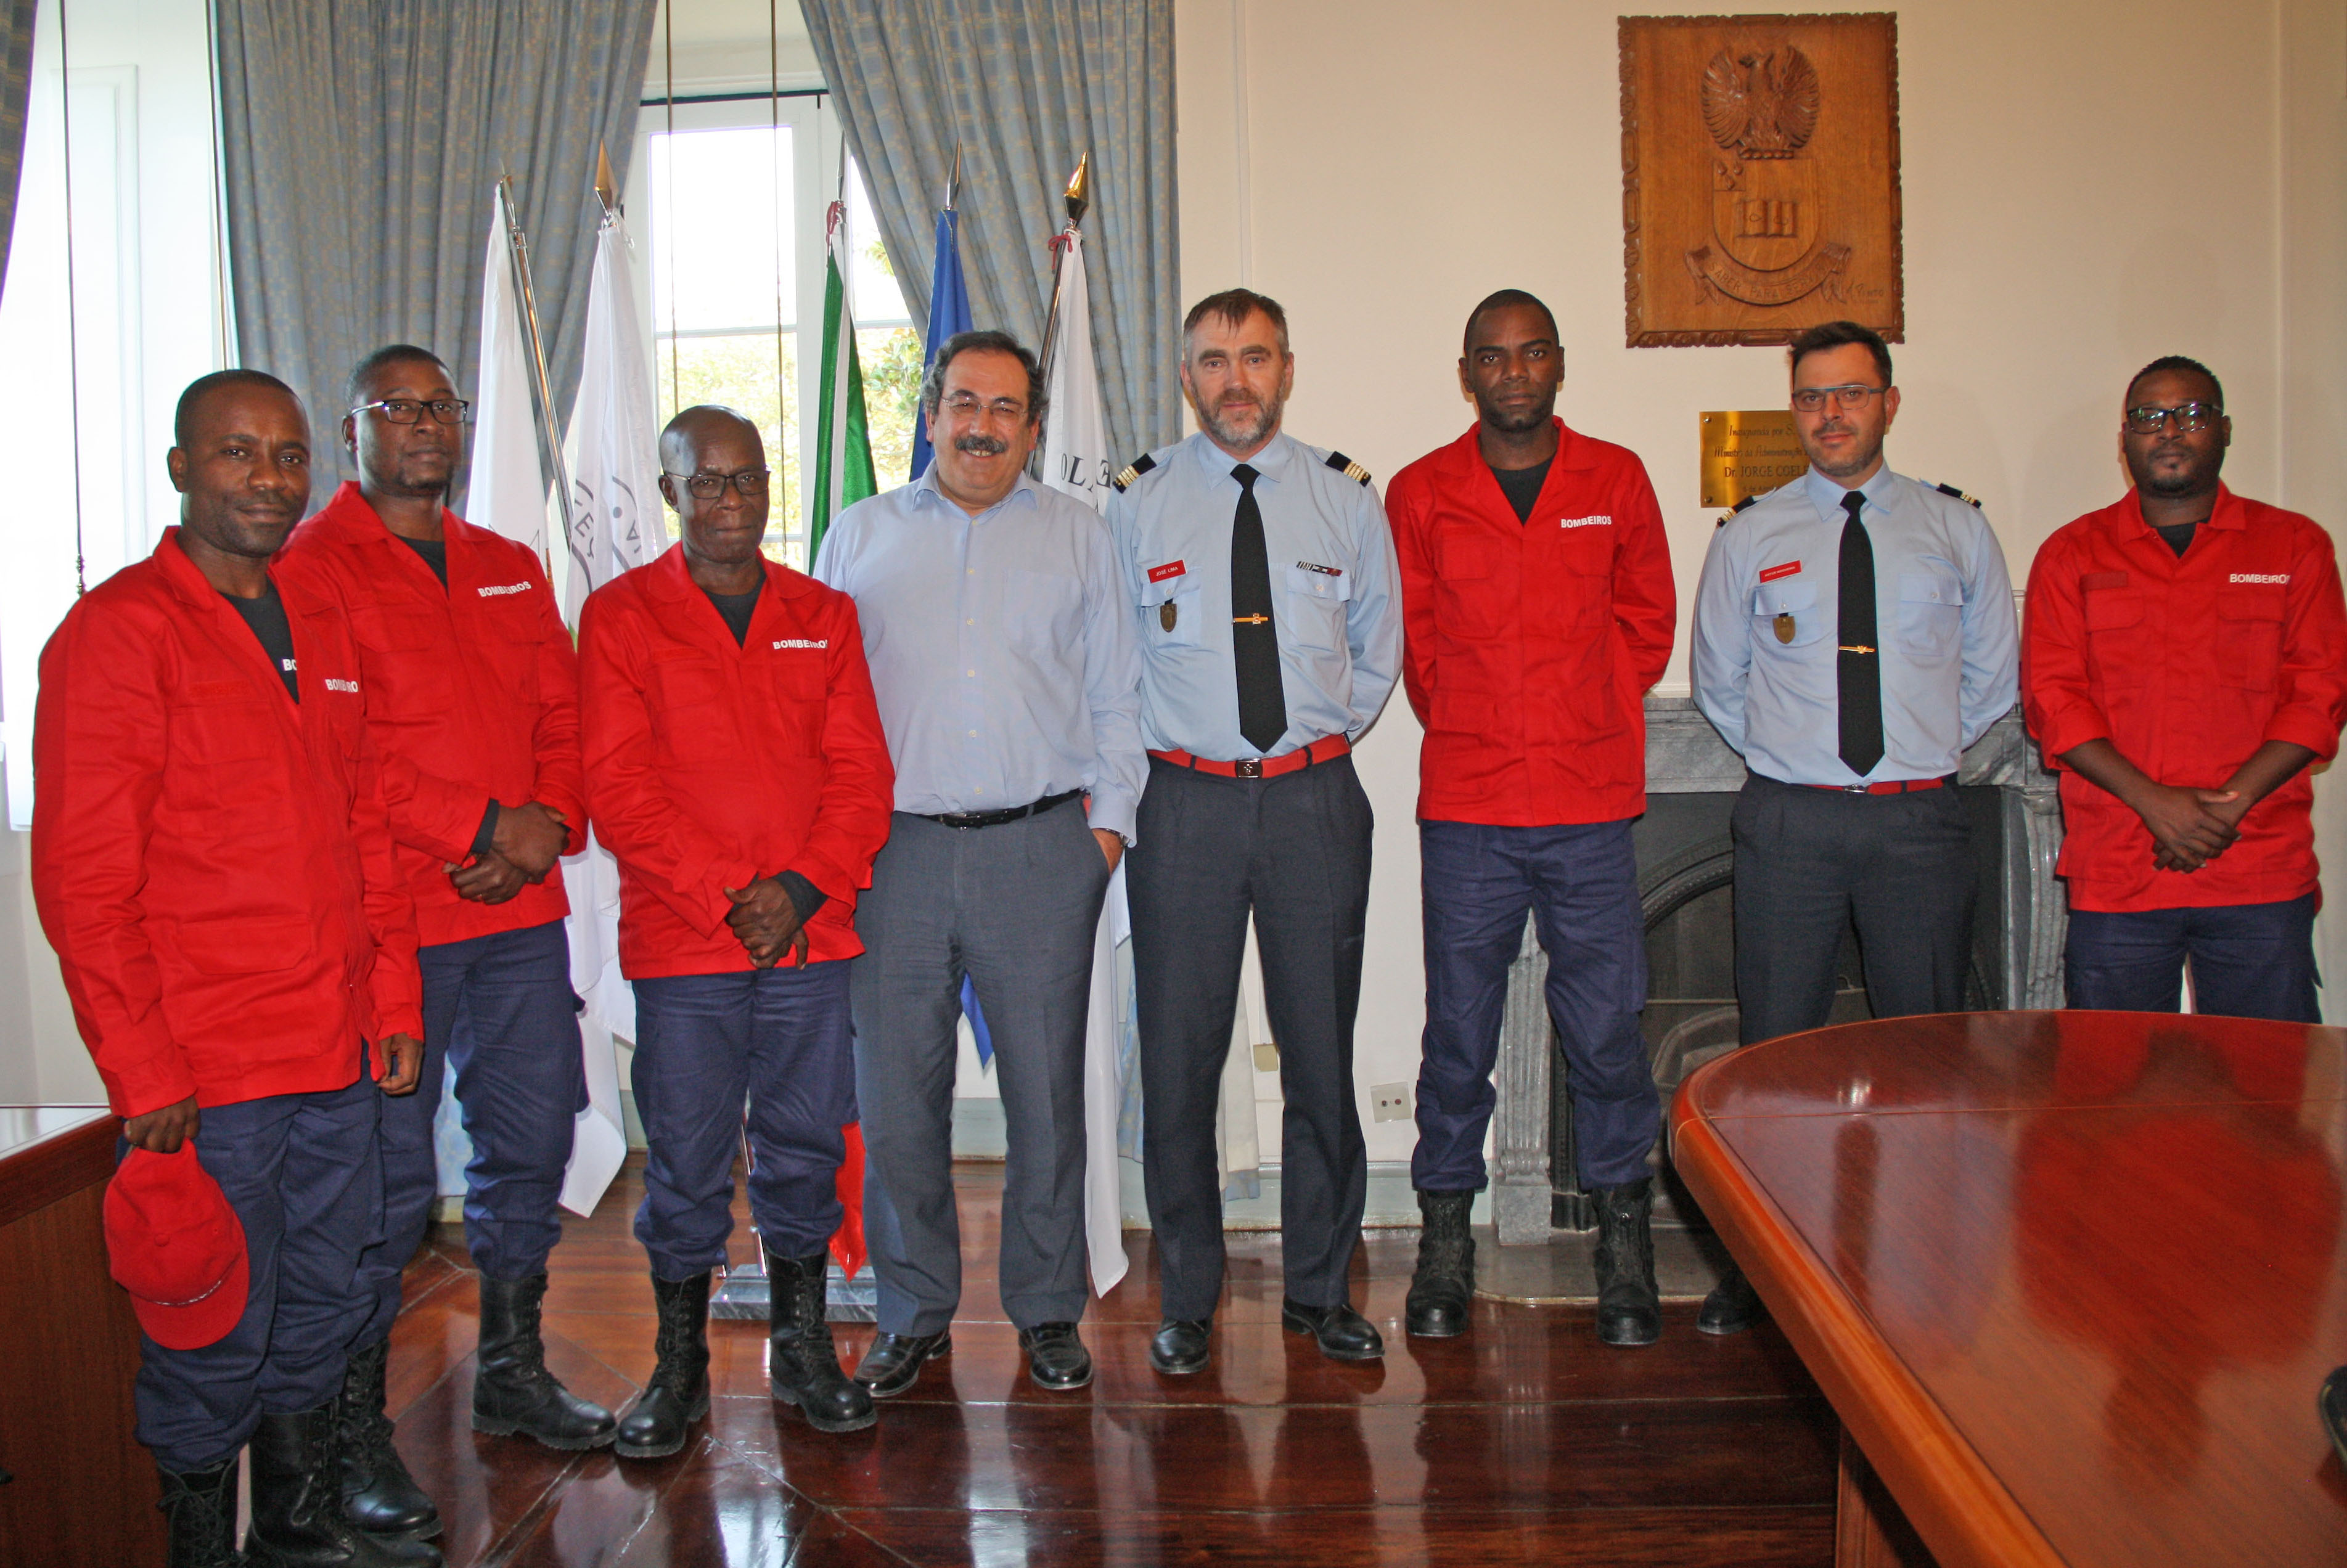 O grupo de bombeiros angolanos foi recebido pelo Presidente da ENB, Dr. José Ferreira.